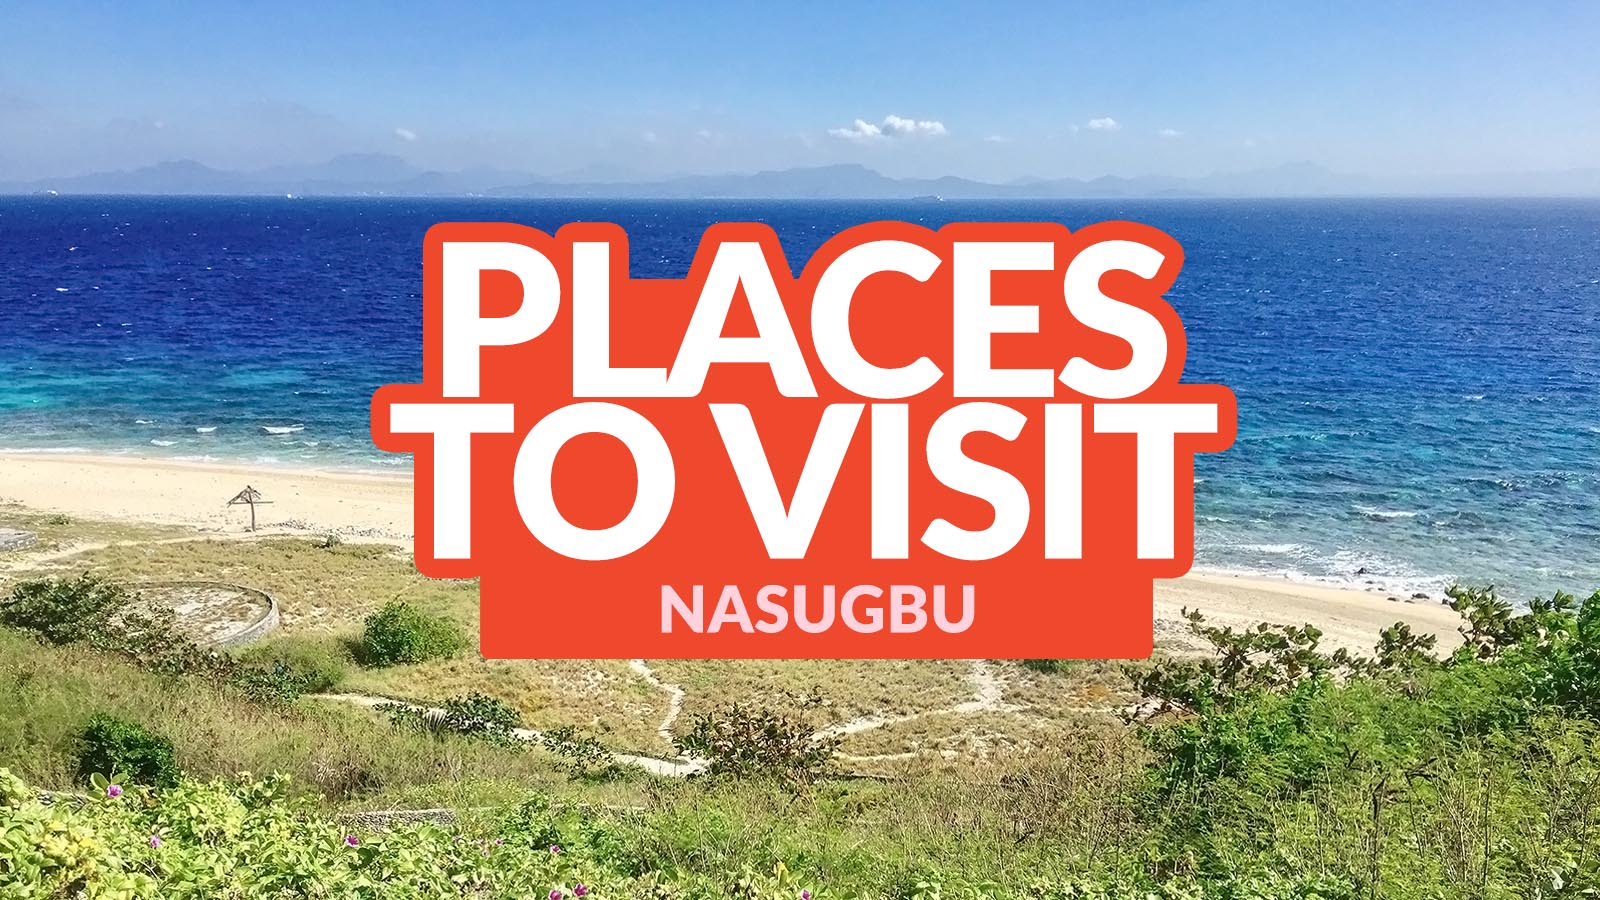 Nasugbu batangas tourist spot